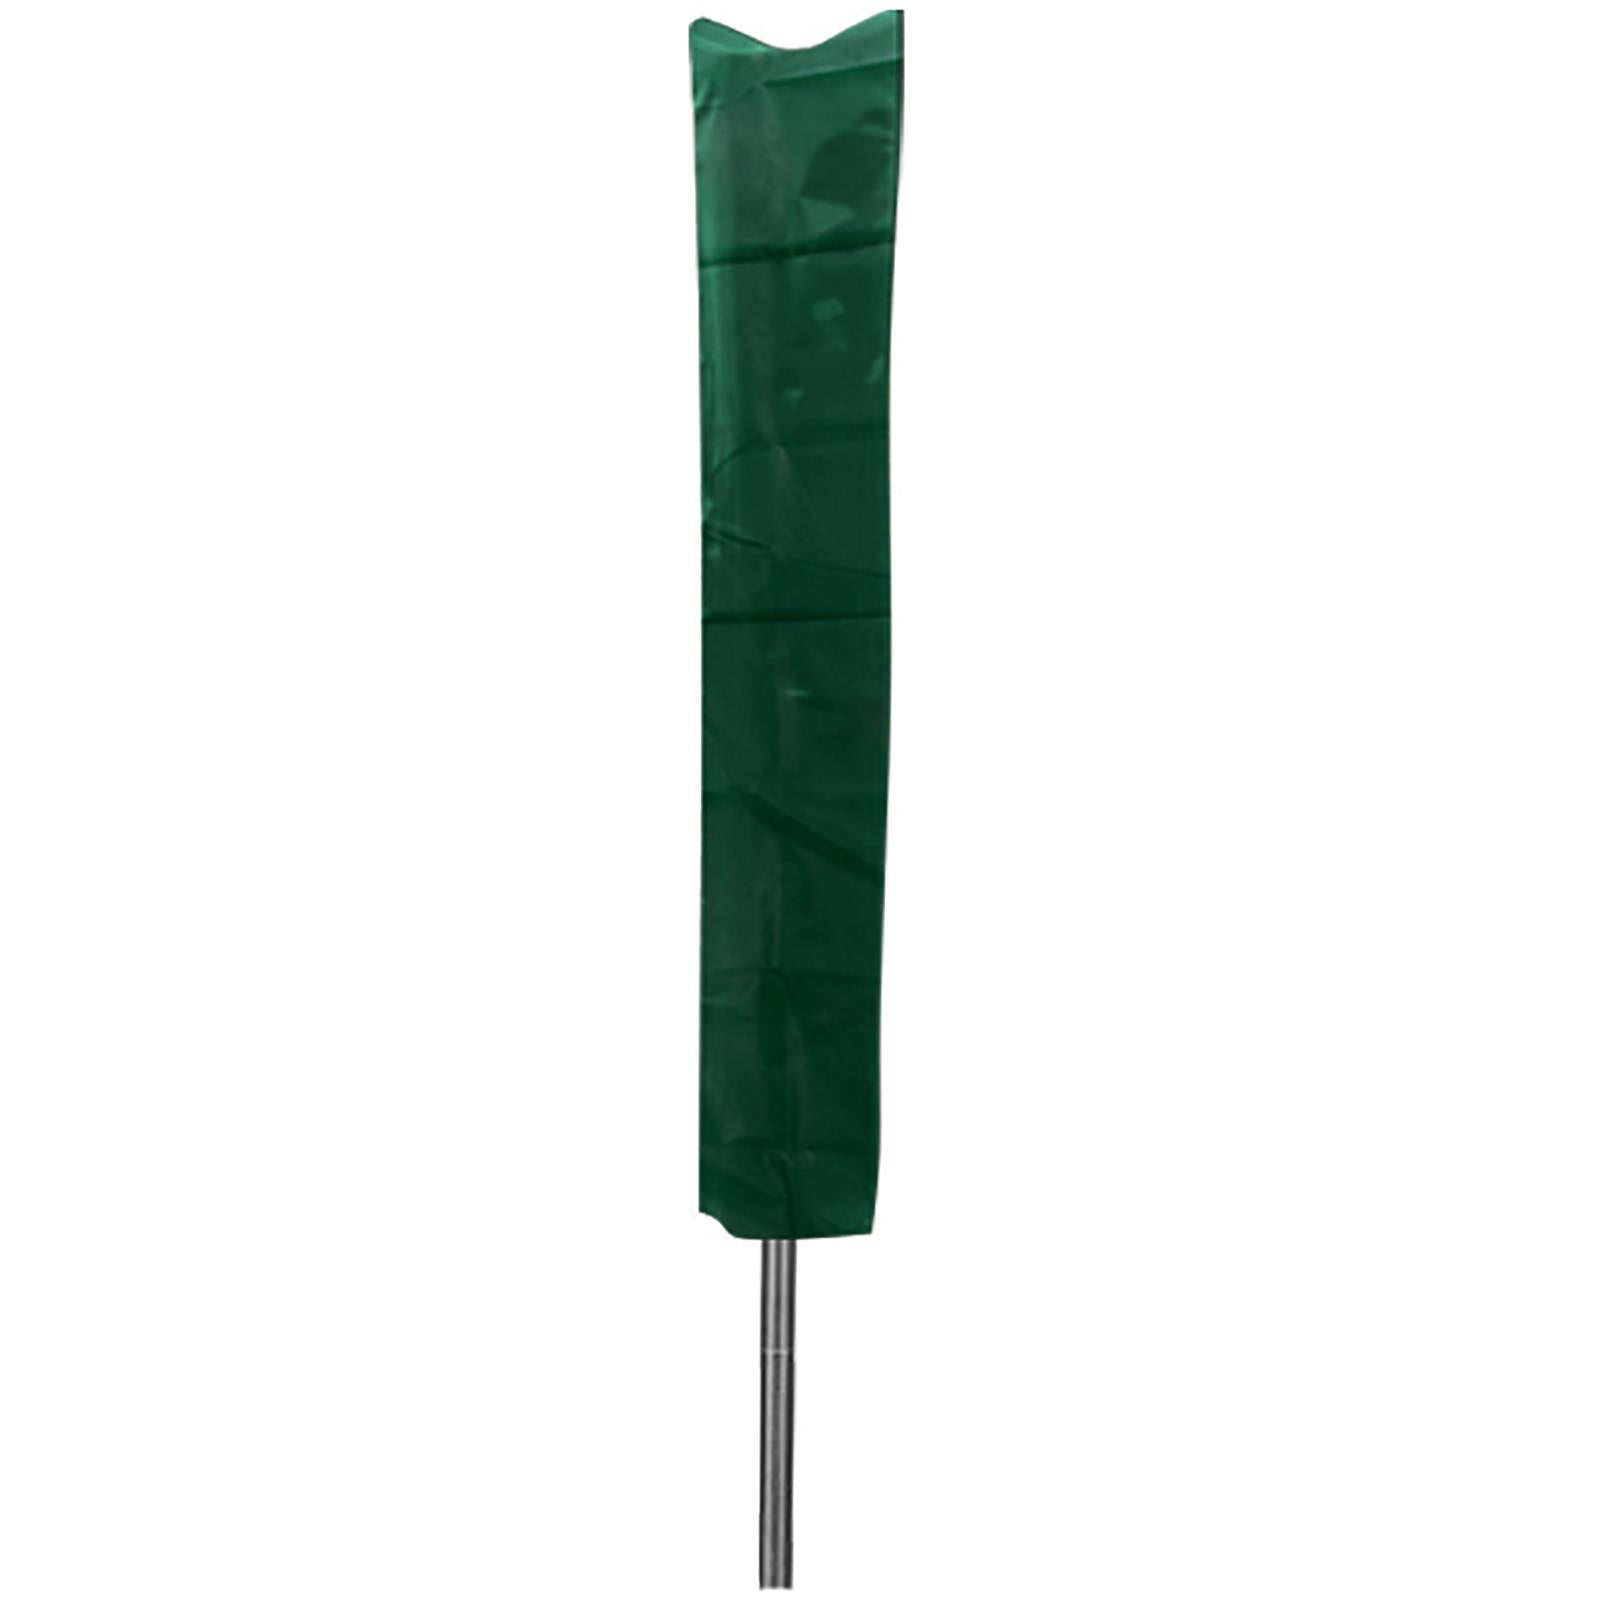 Silverline Rotary Washing Line Cover Garden Parasol Umbrella Waterproof Tear-Resistant